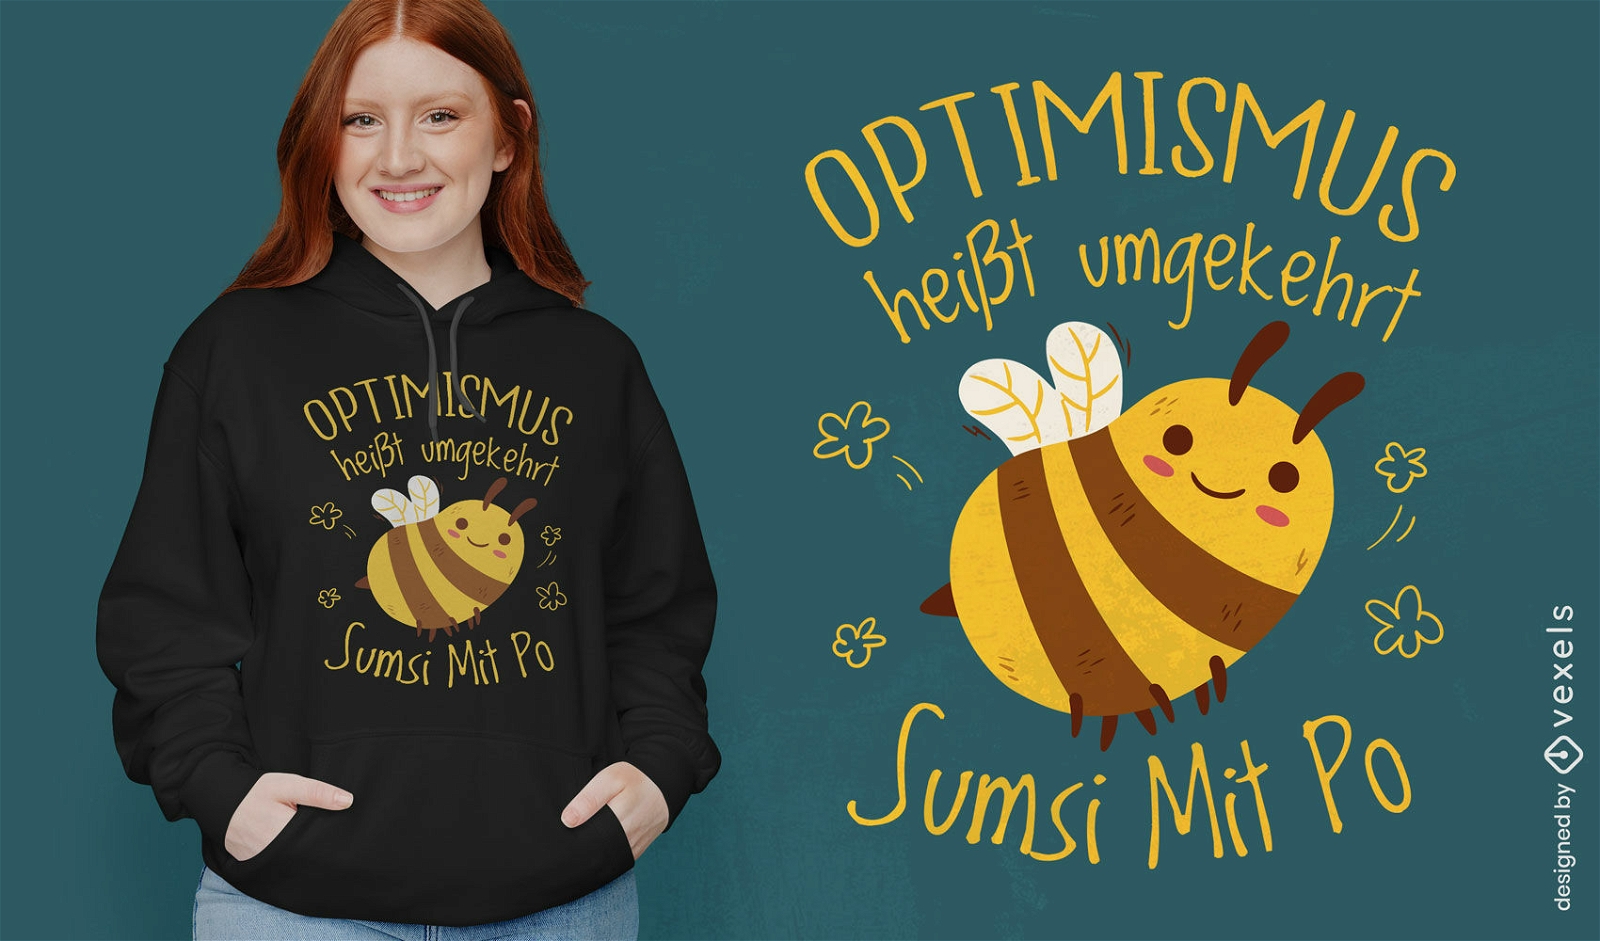 Dise?o de camiseta de cita de abeja de optimismo.